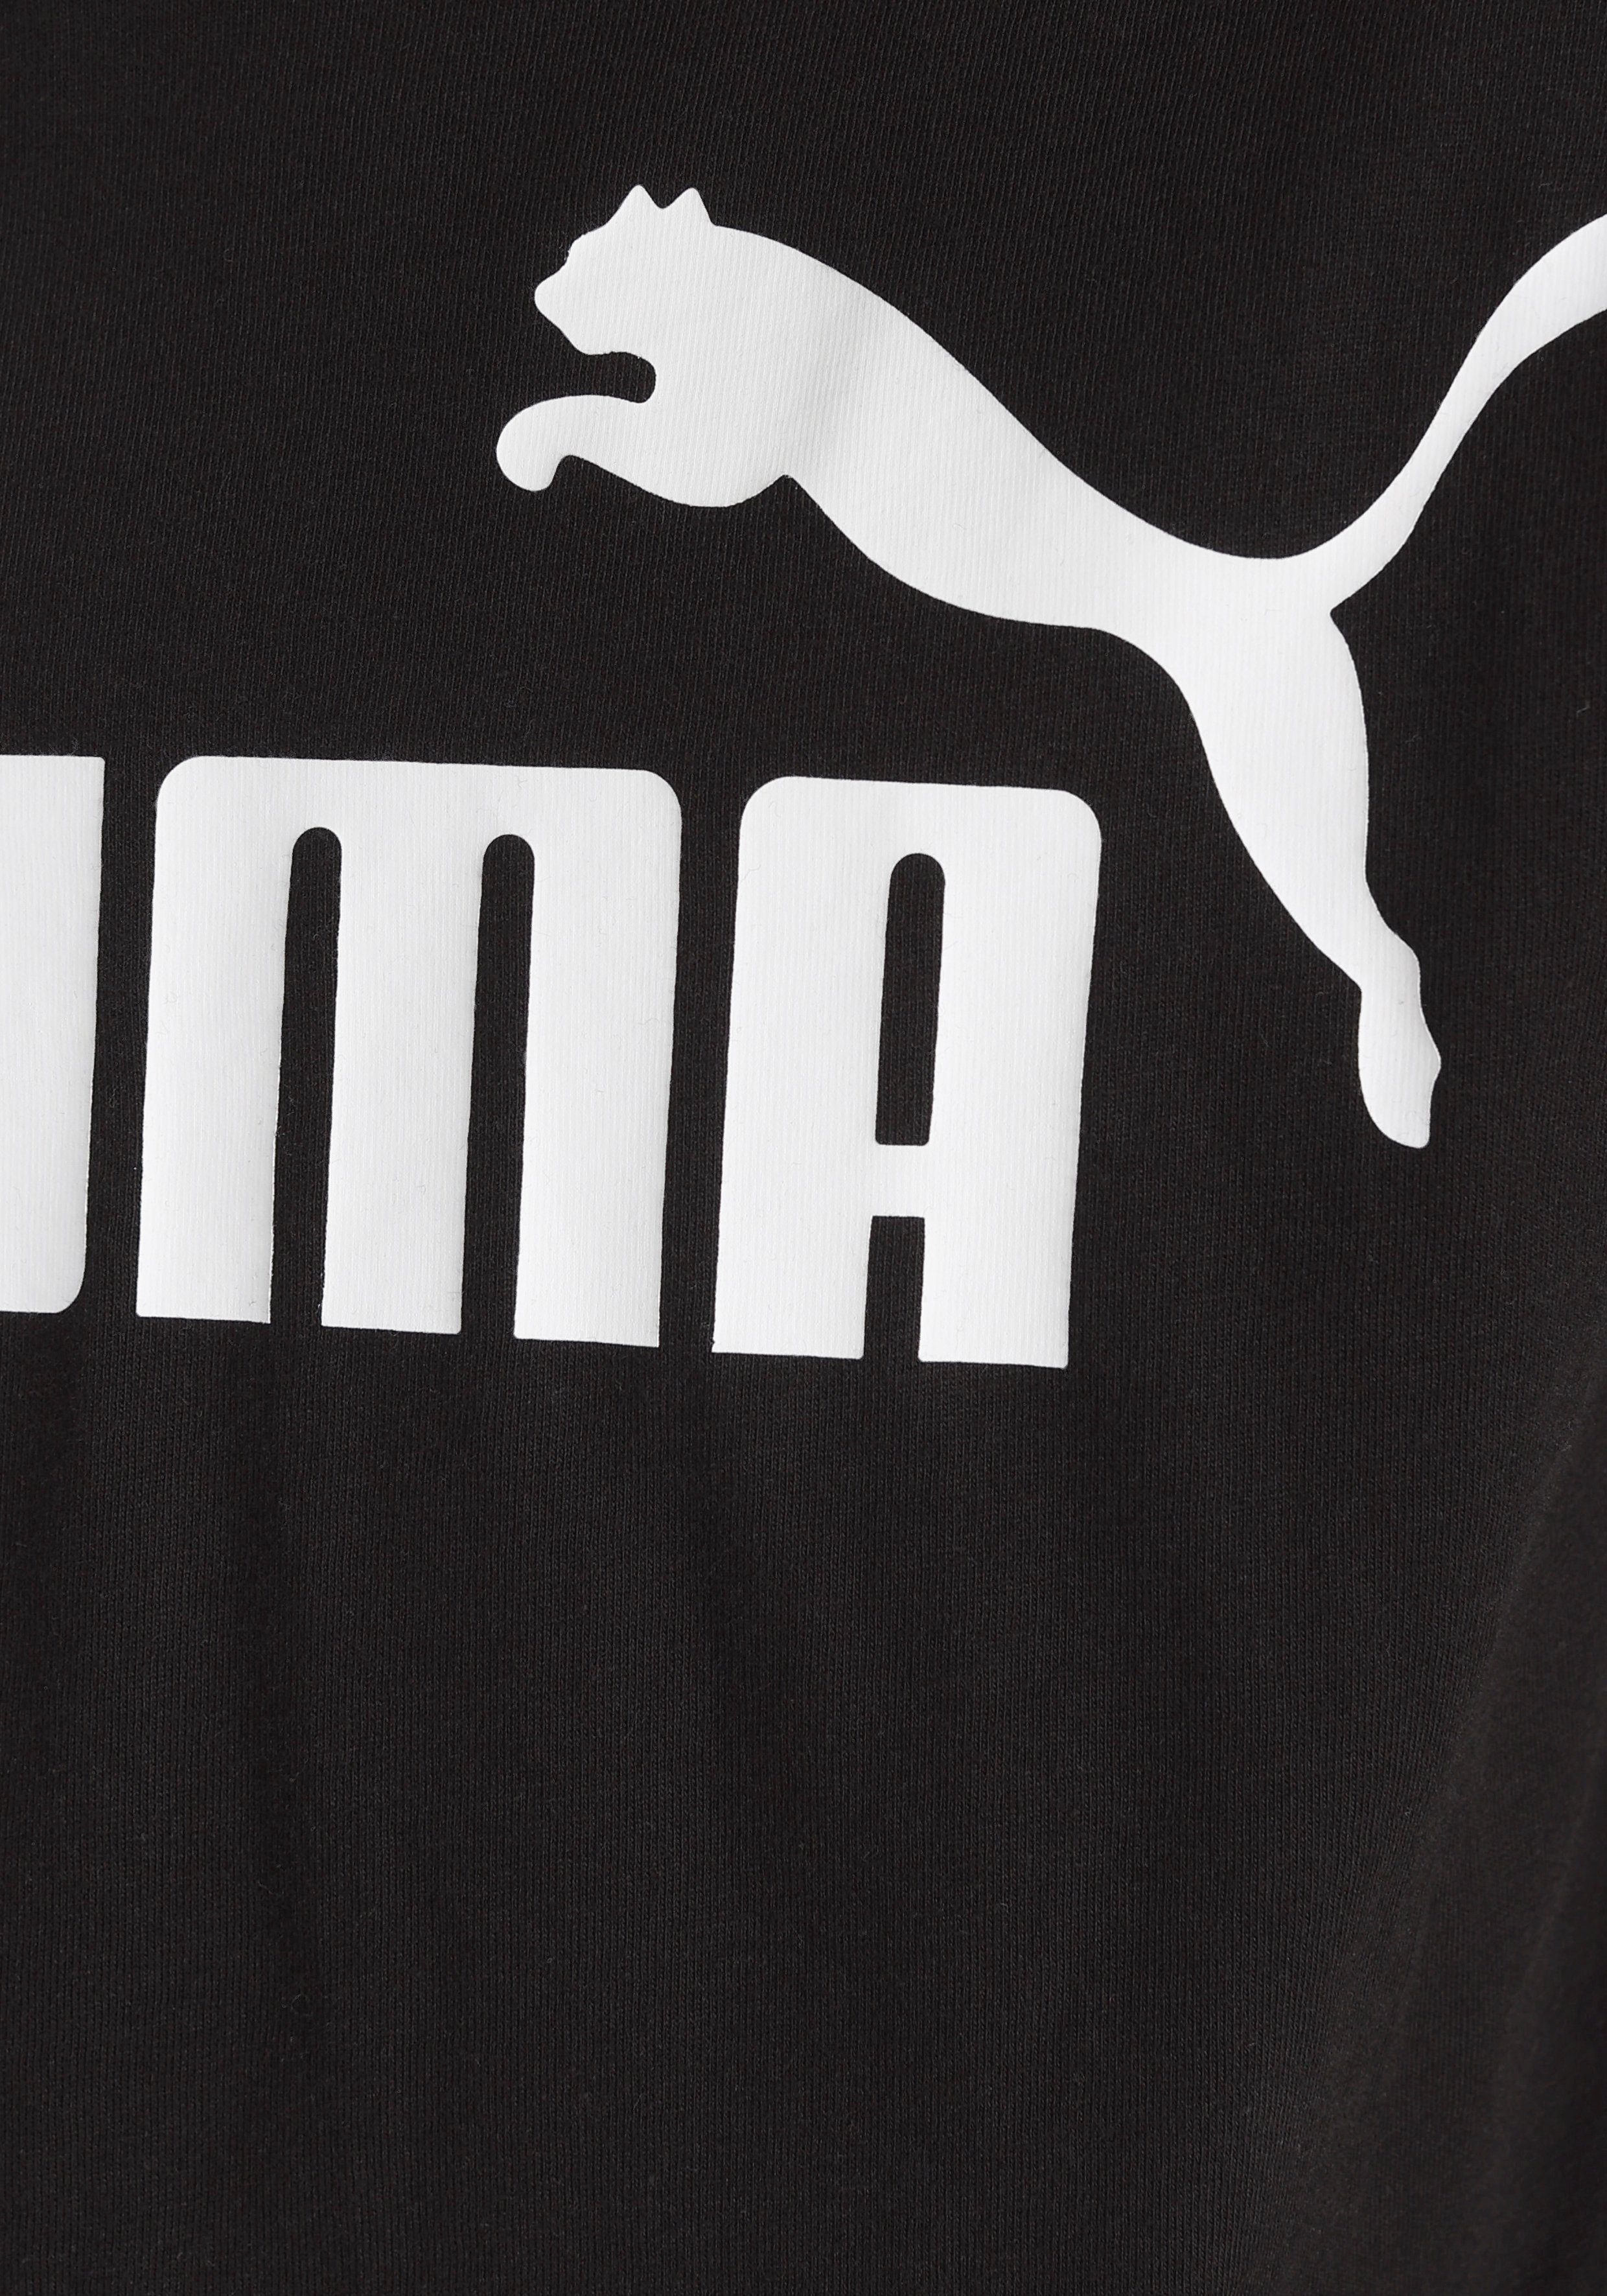 TEE T-Shirt Puma B LOGO PUMA ESS Black